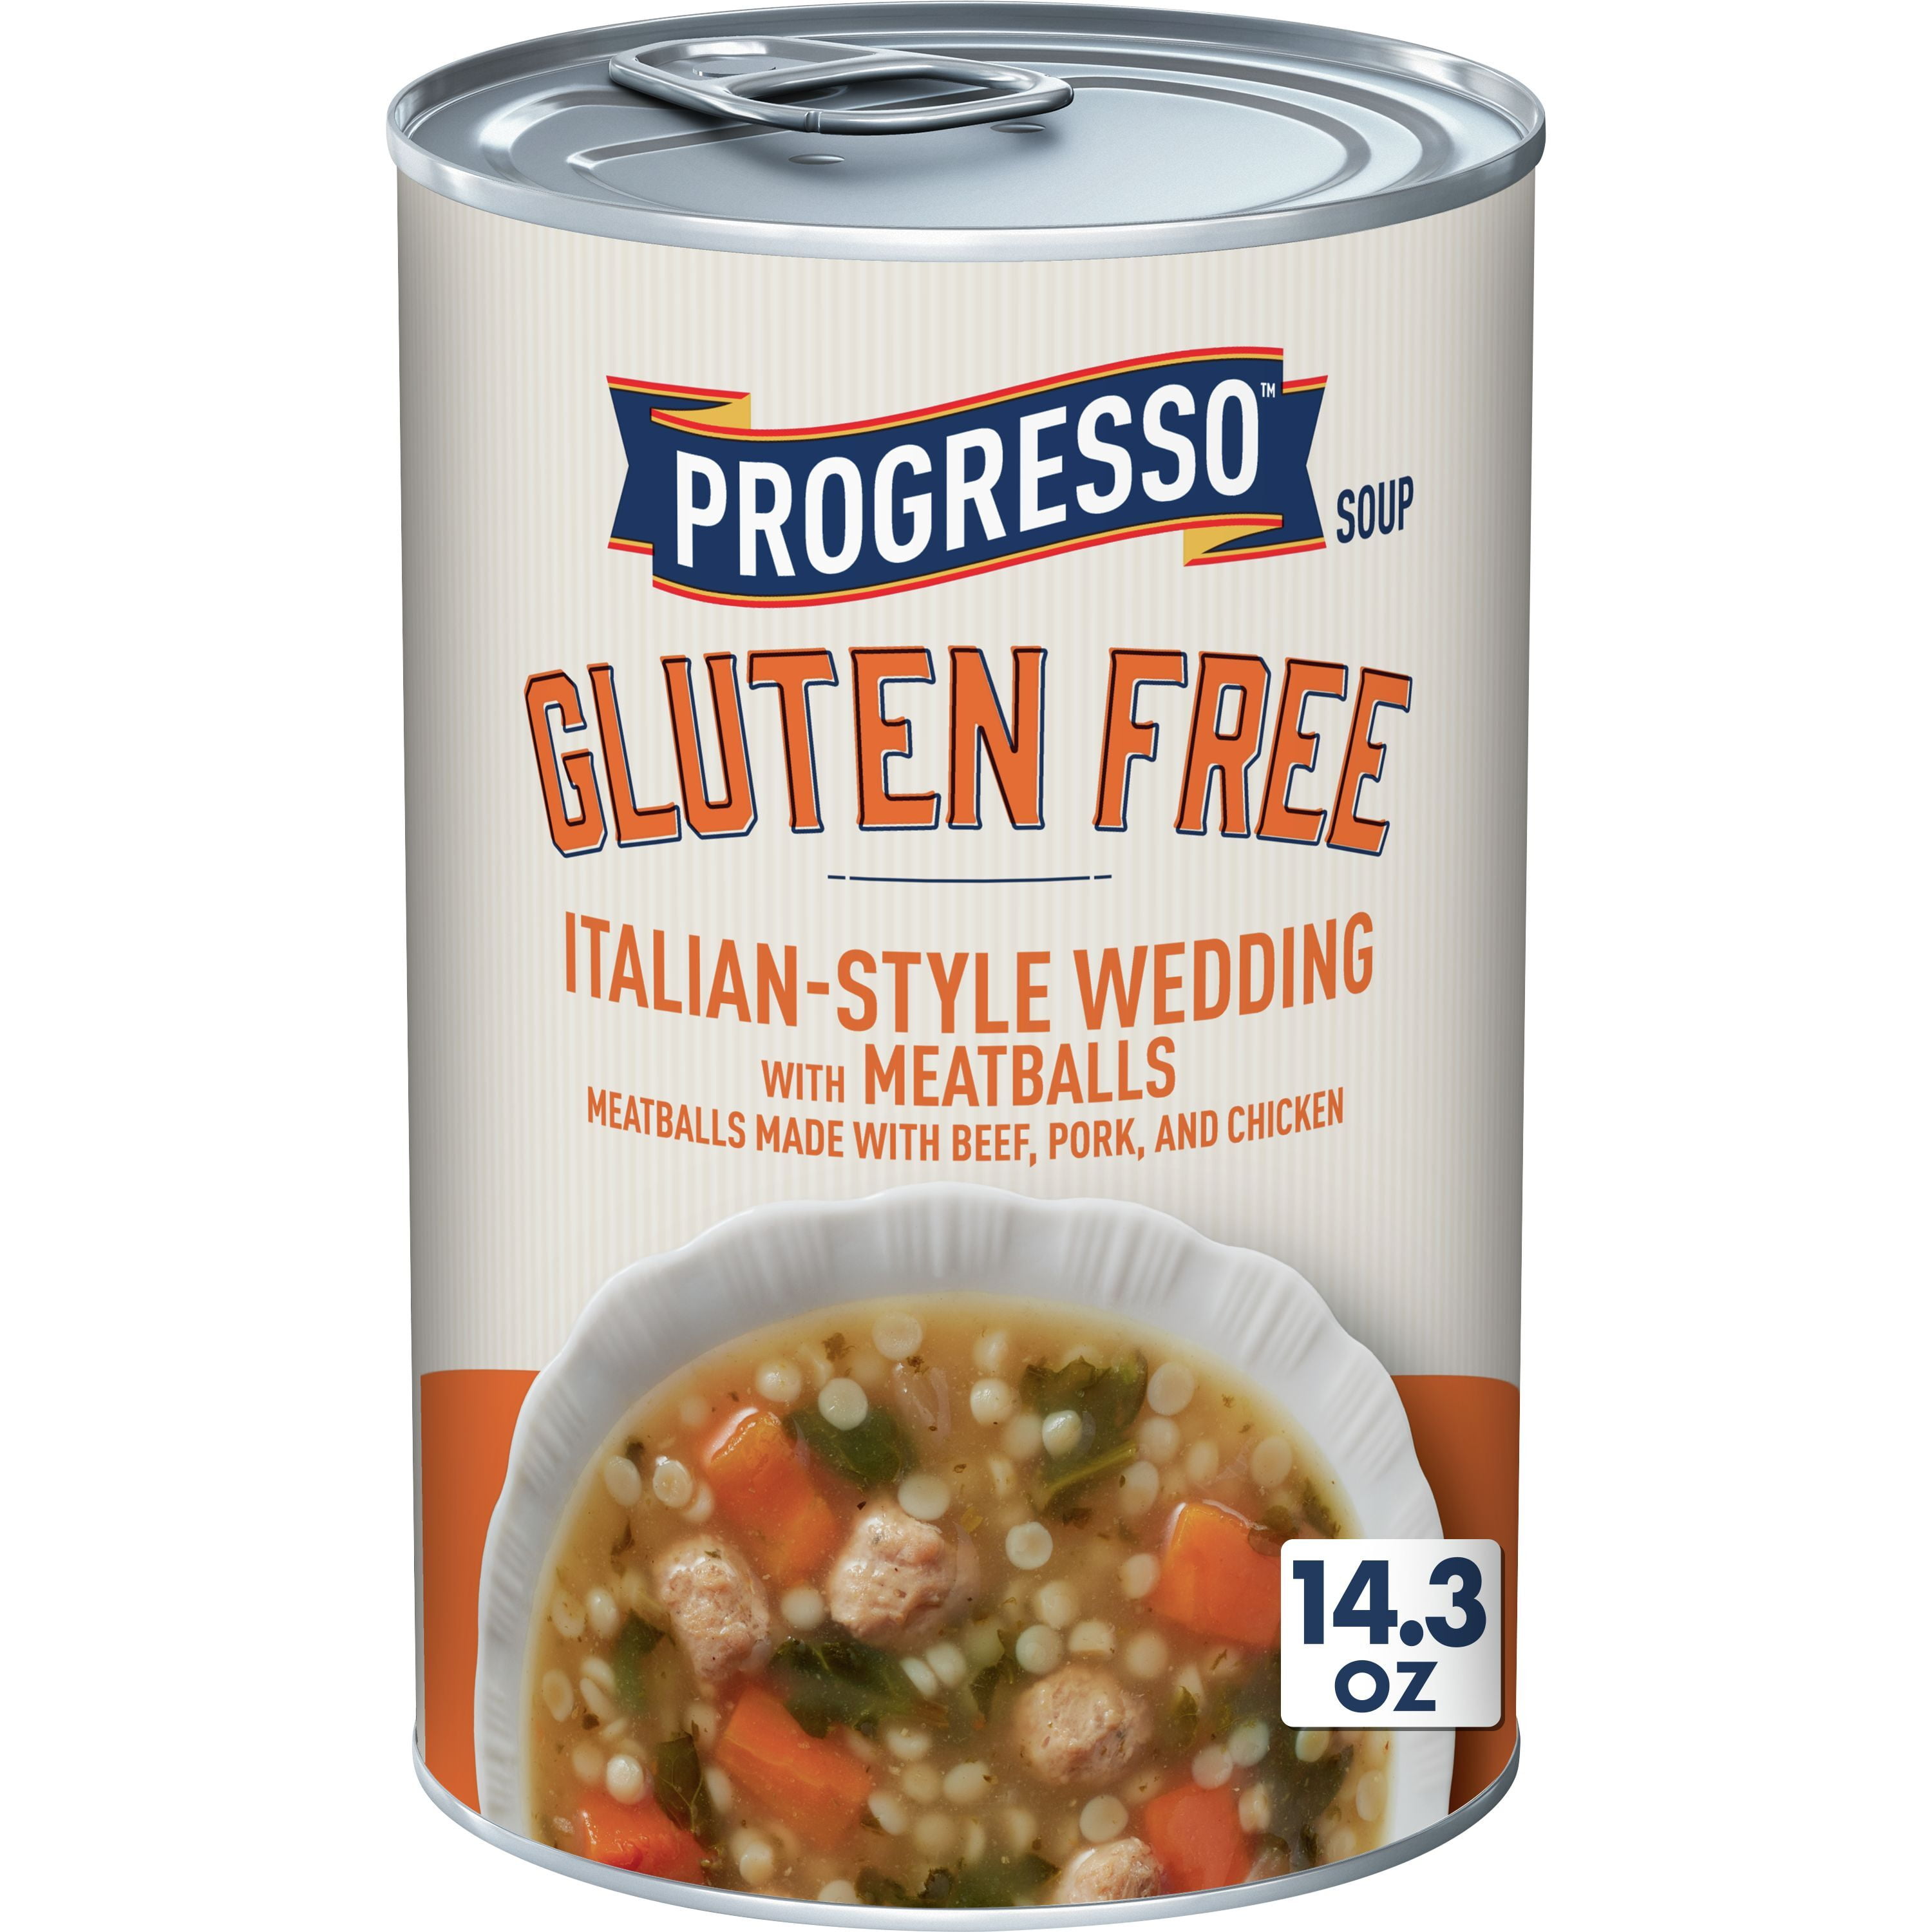 Progresso Gluten Free Italian-Style Wedding With Meatballs Canned Soup, 14 oz